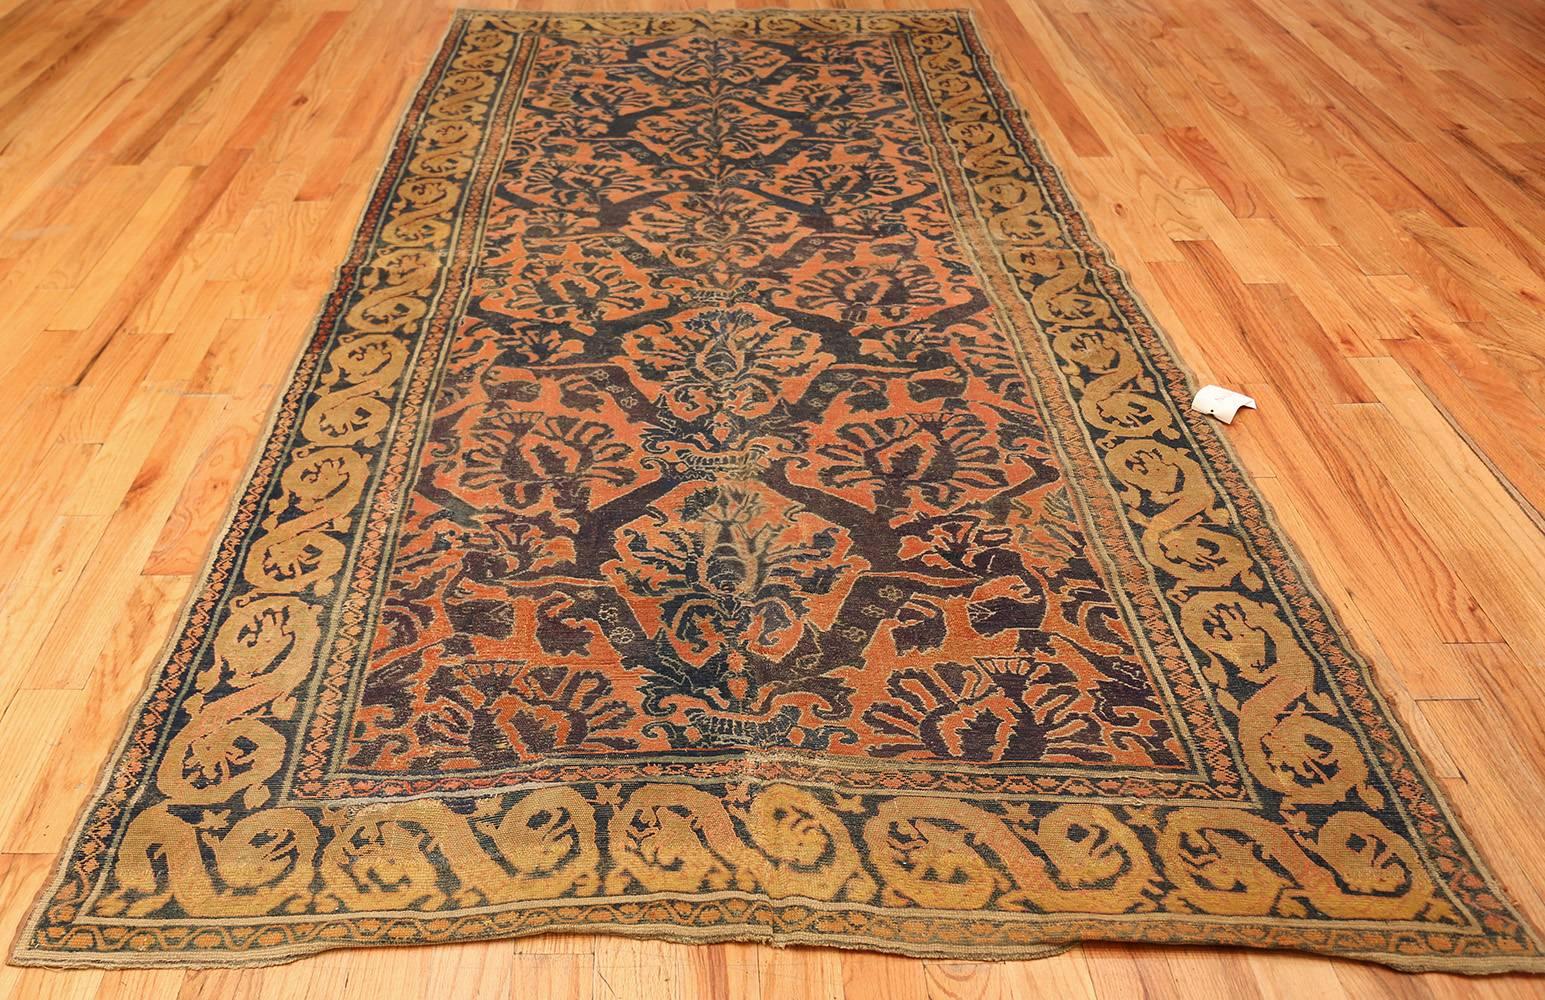 Antique 16th Century Alcaraz Carpet, Country of Origin: Spain, Circa Date: Second Half of the 16th Century-Size: 5 ft x 10 ft 2 in (1.52 m x 3.1 m).